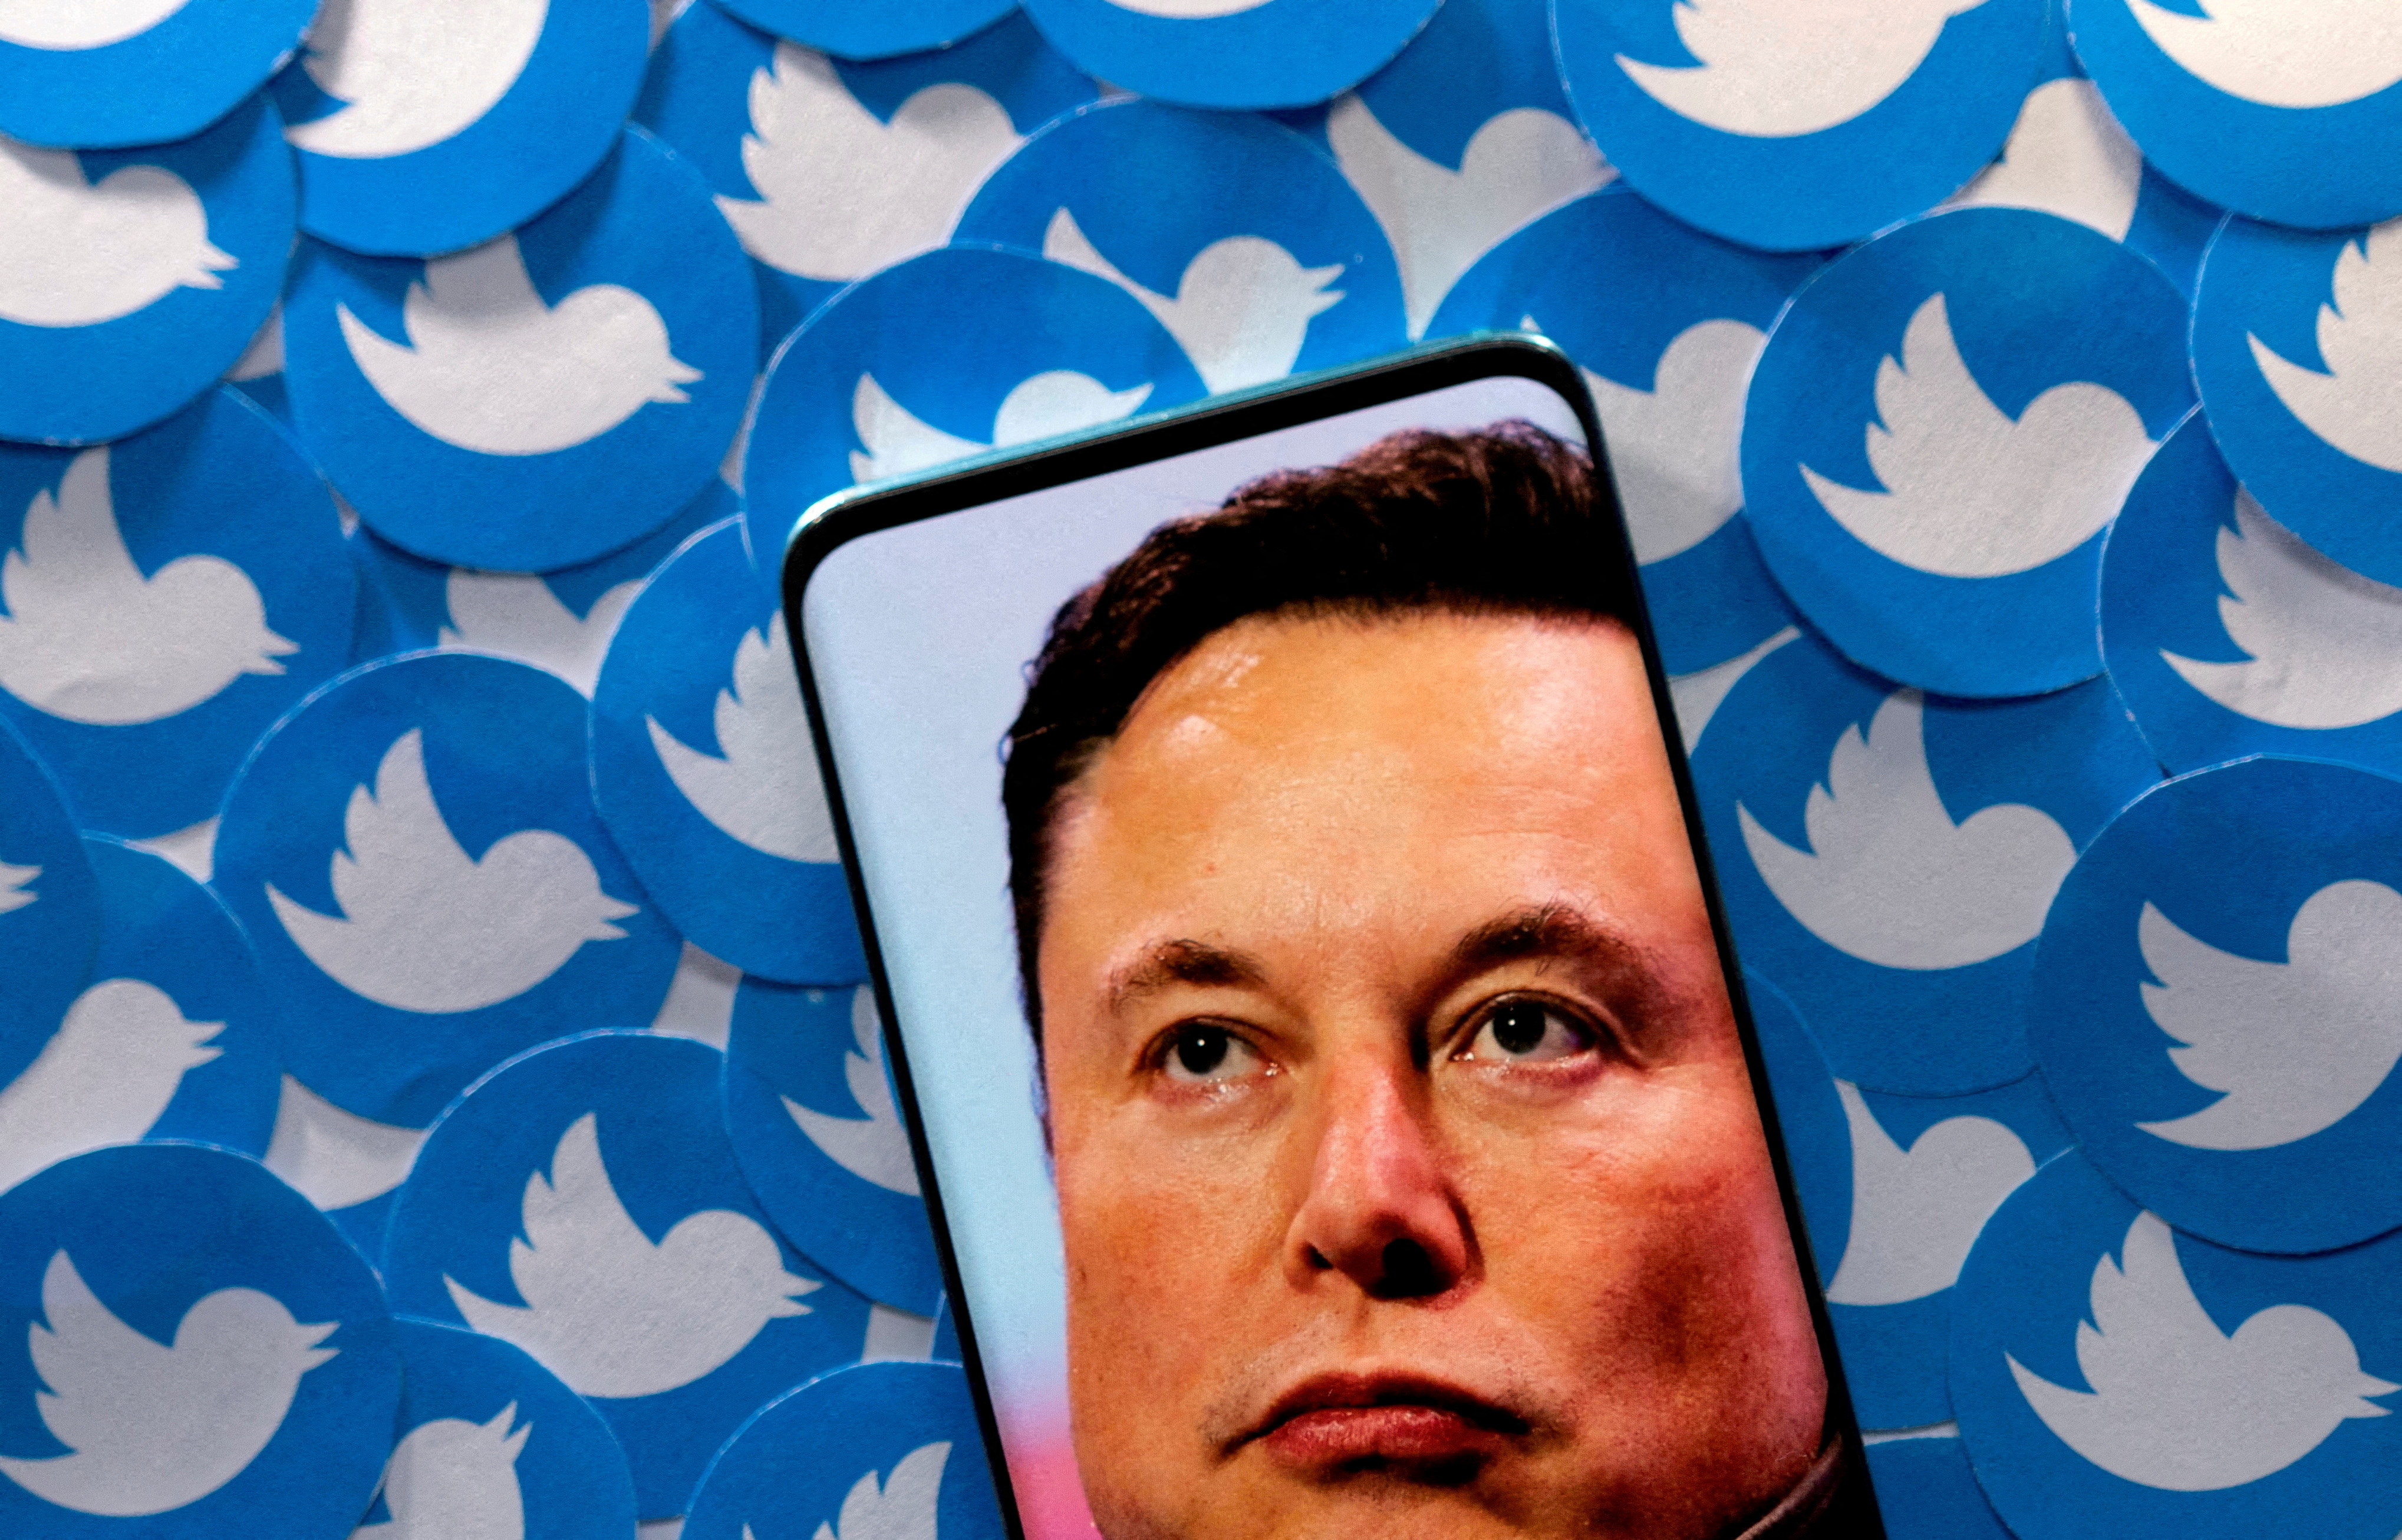 Continúa la disputa entre Twitter y Elon Musk tras la fallida compra (REUTERS/Dado Ruvic/Illustration)